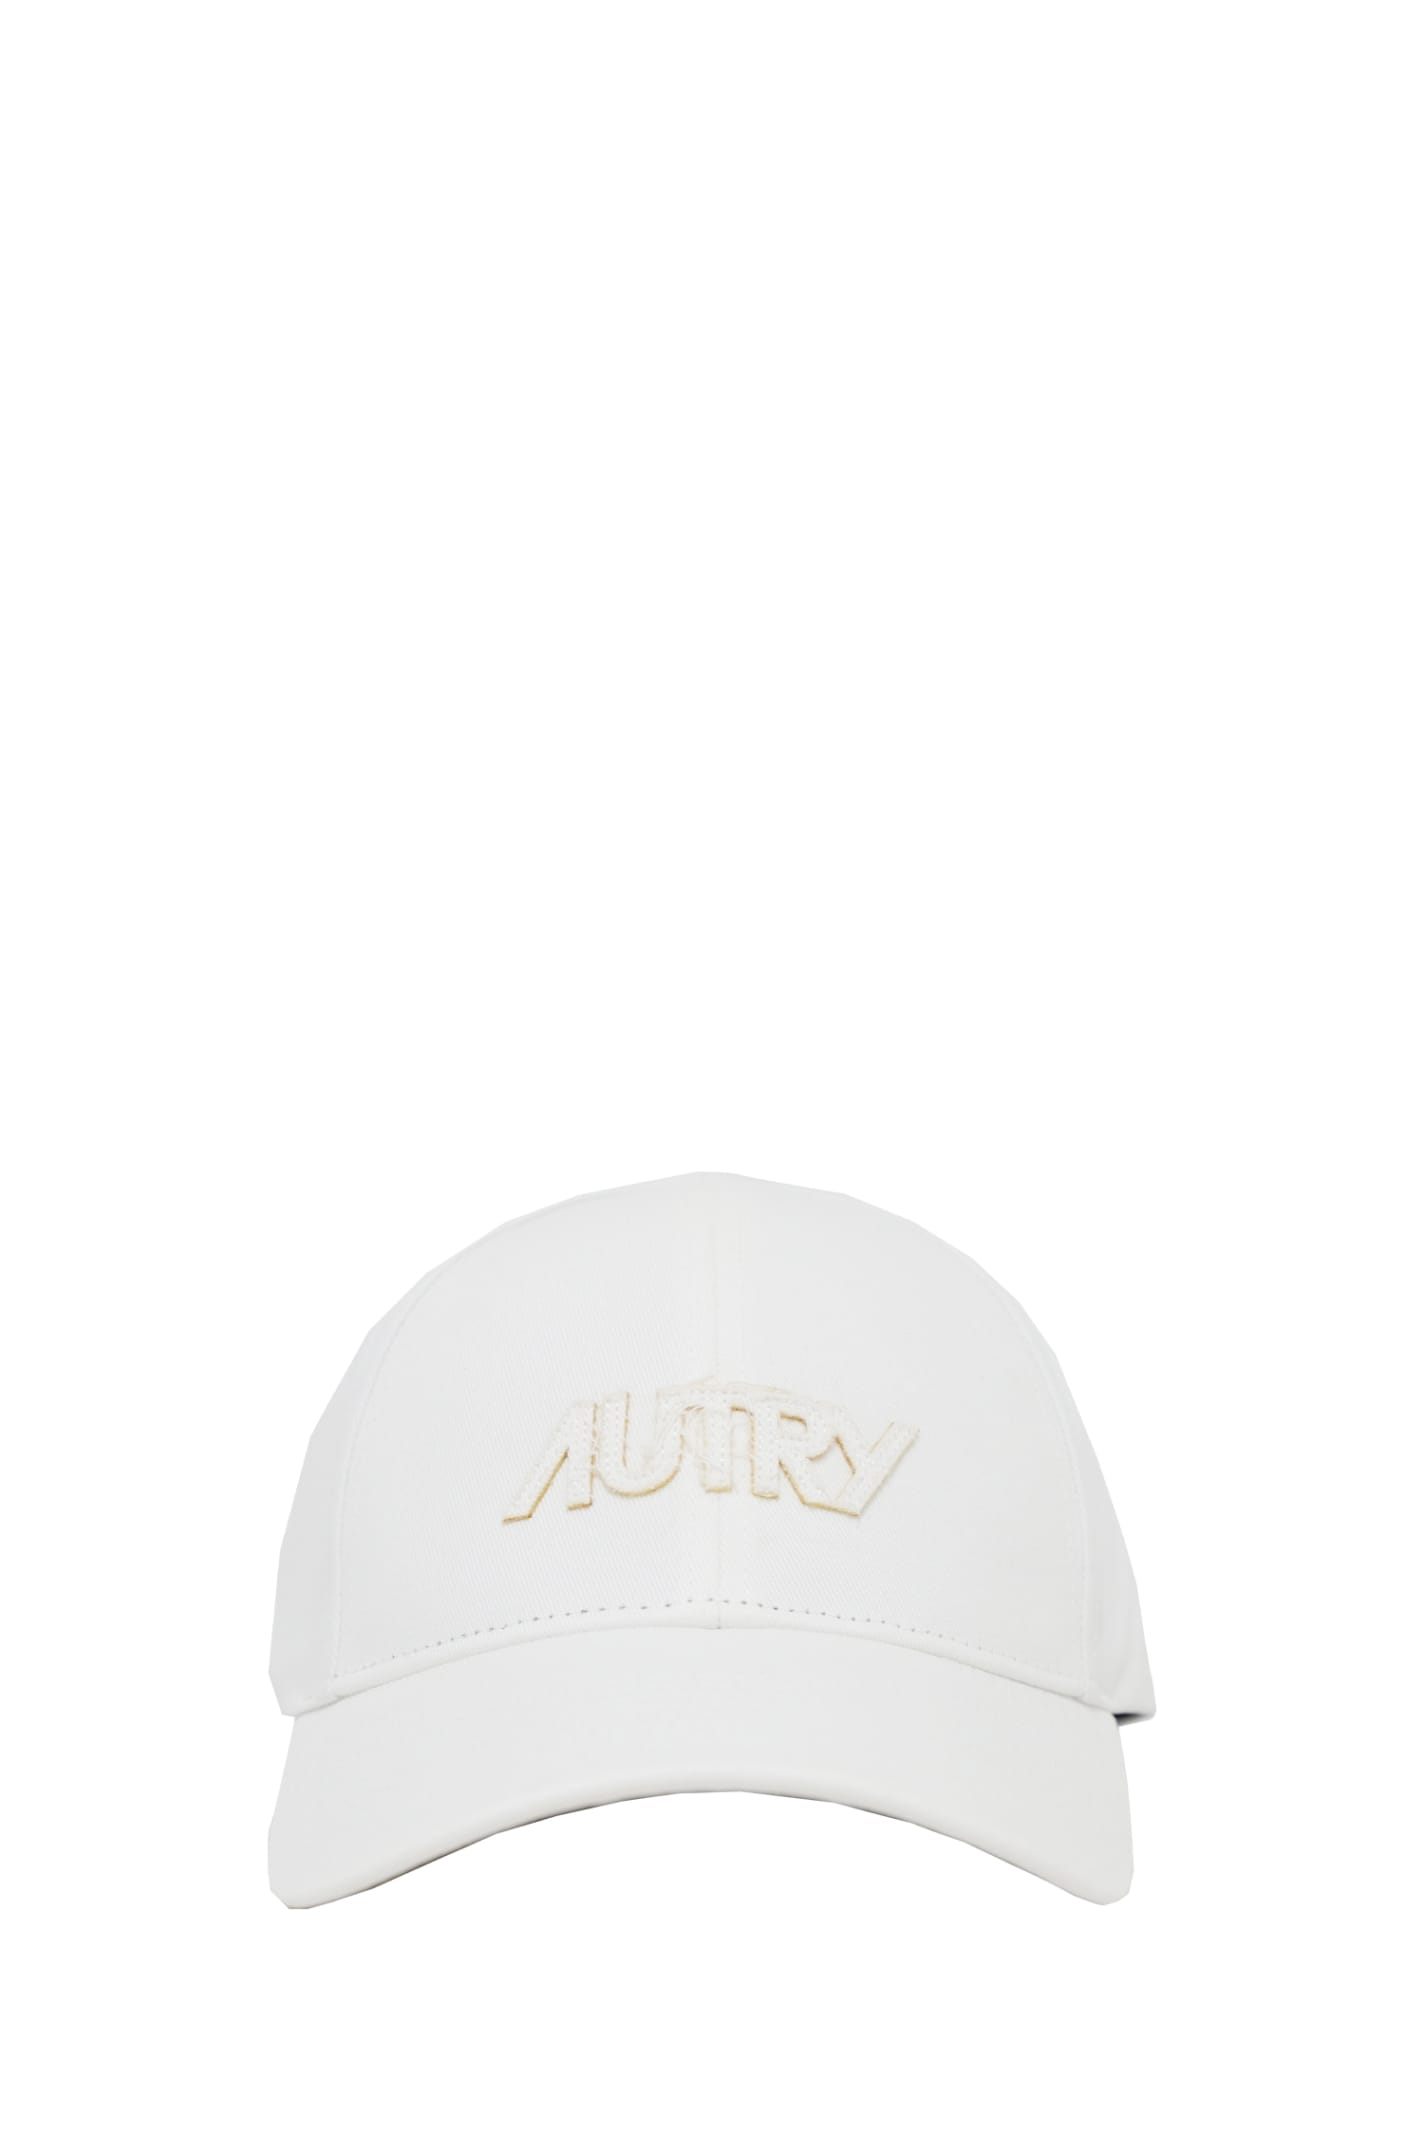 Shop Autry Hat In White